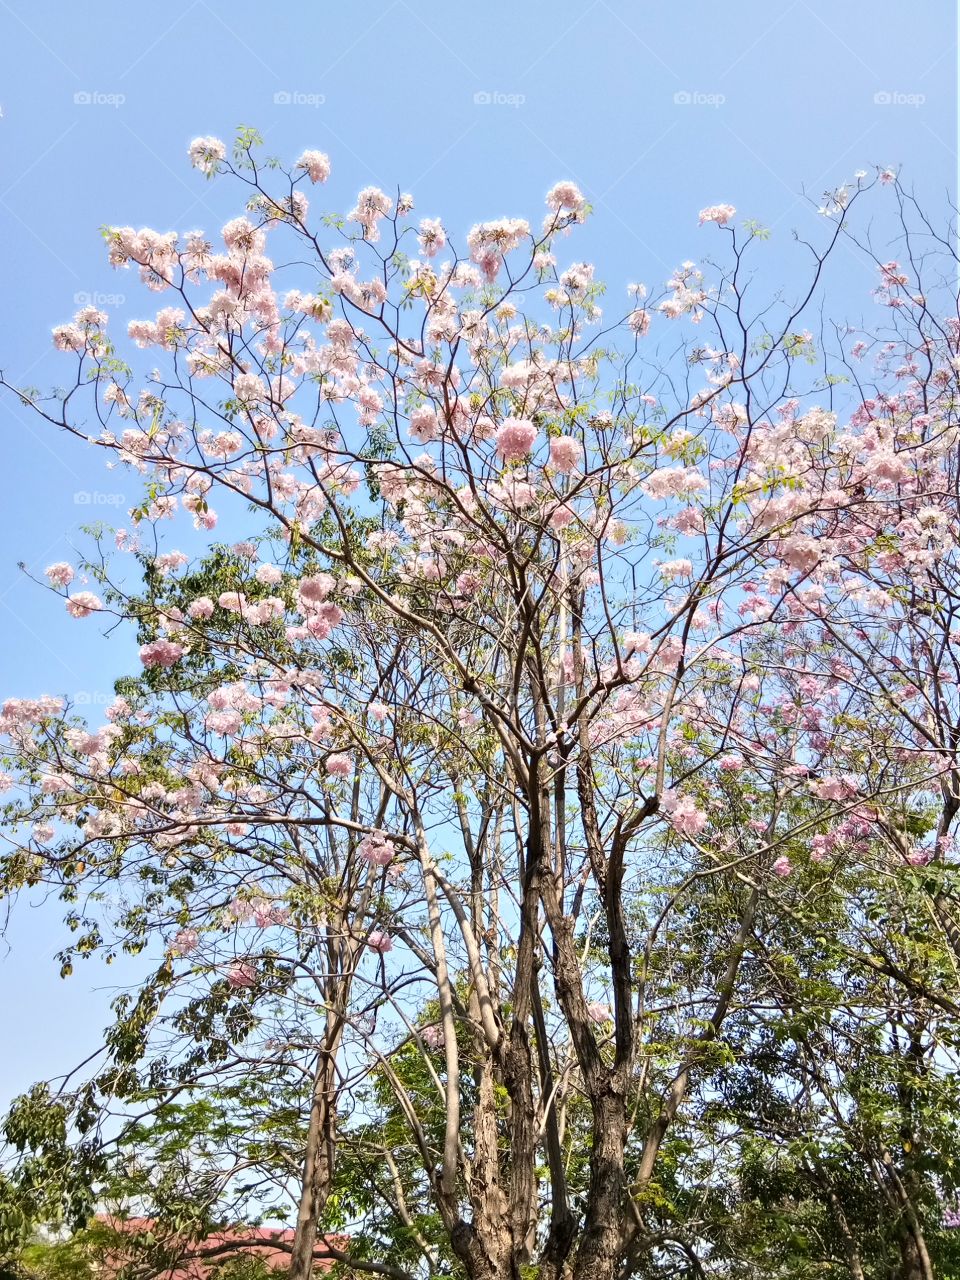 chompoo pantip
chompoo flower
chompoo tree